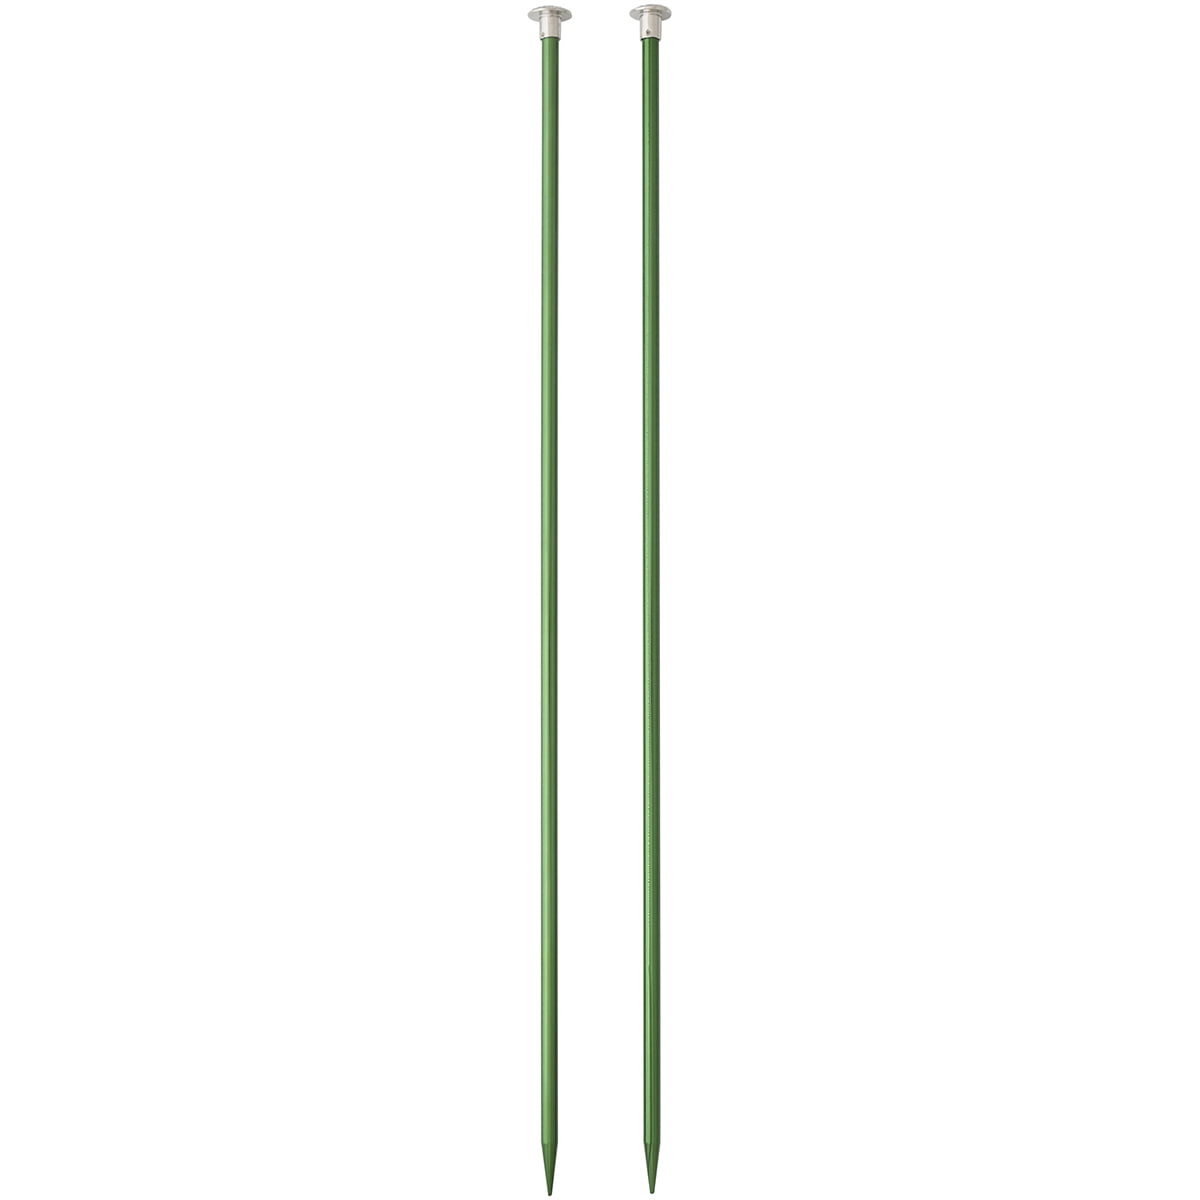 Wrights Boye - 1 PR 14 Aluminum Knitting Needles - Size: US 7 (4.5 mm)